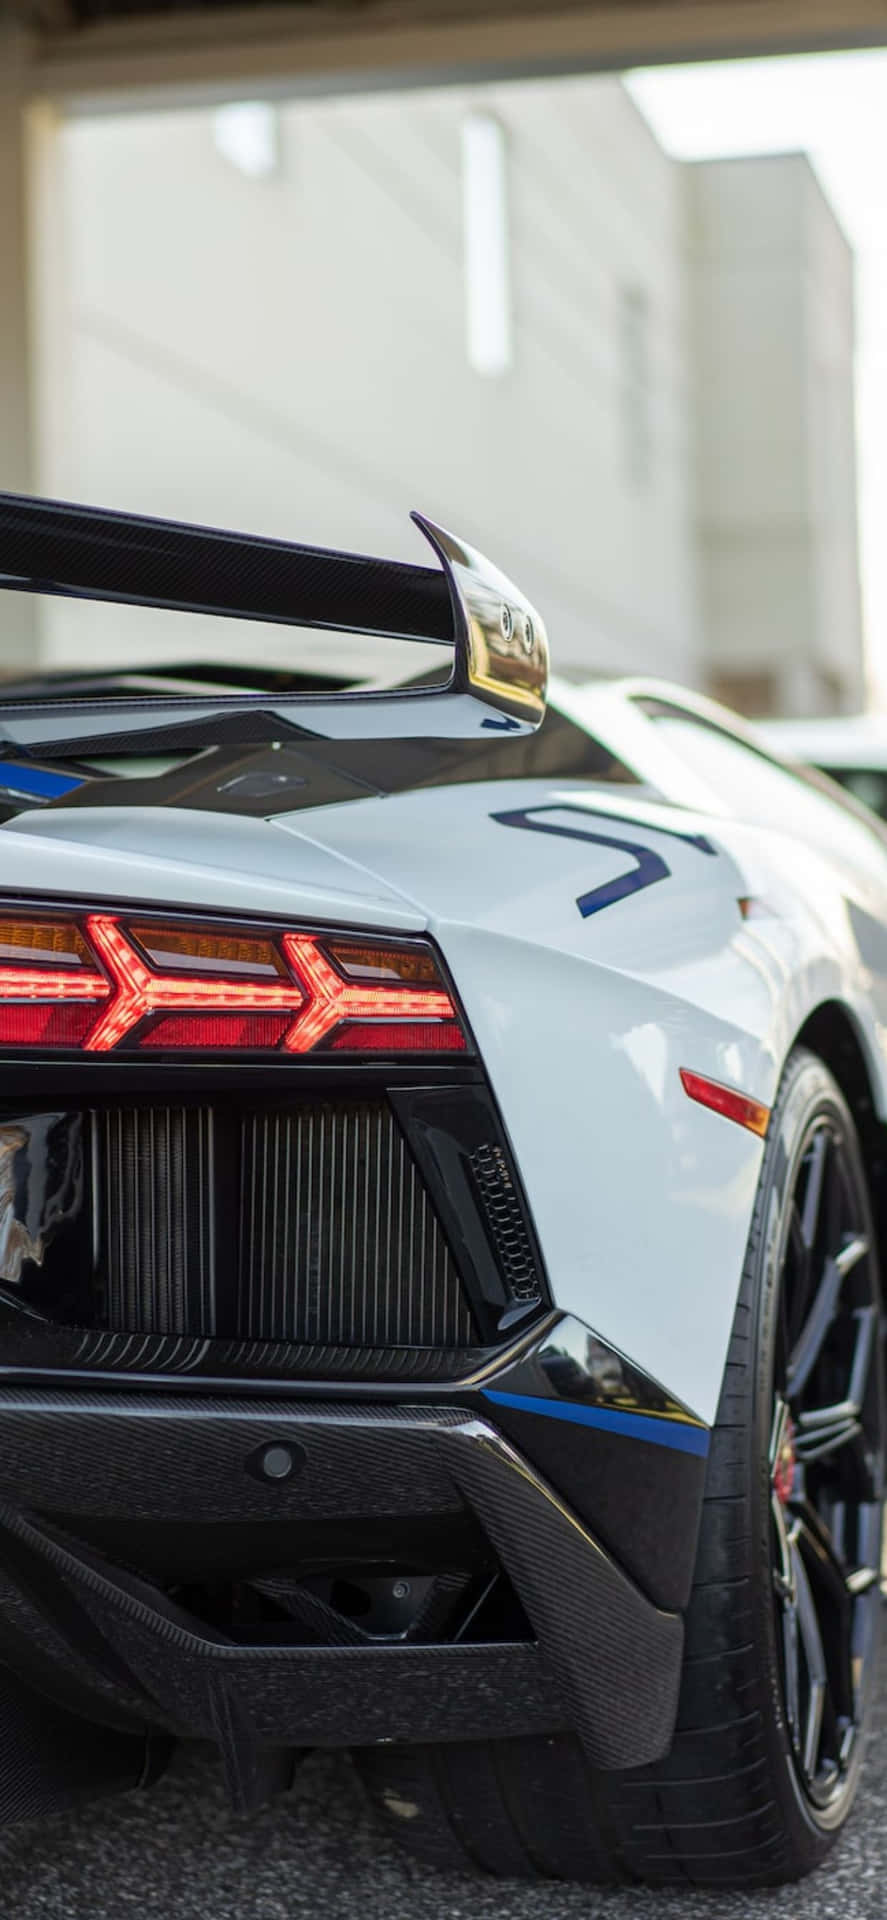 iPhone XS Max Lamborghini White Rear Background